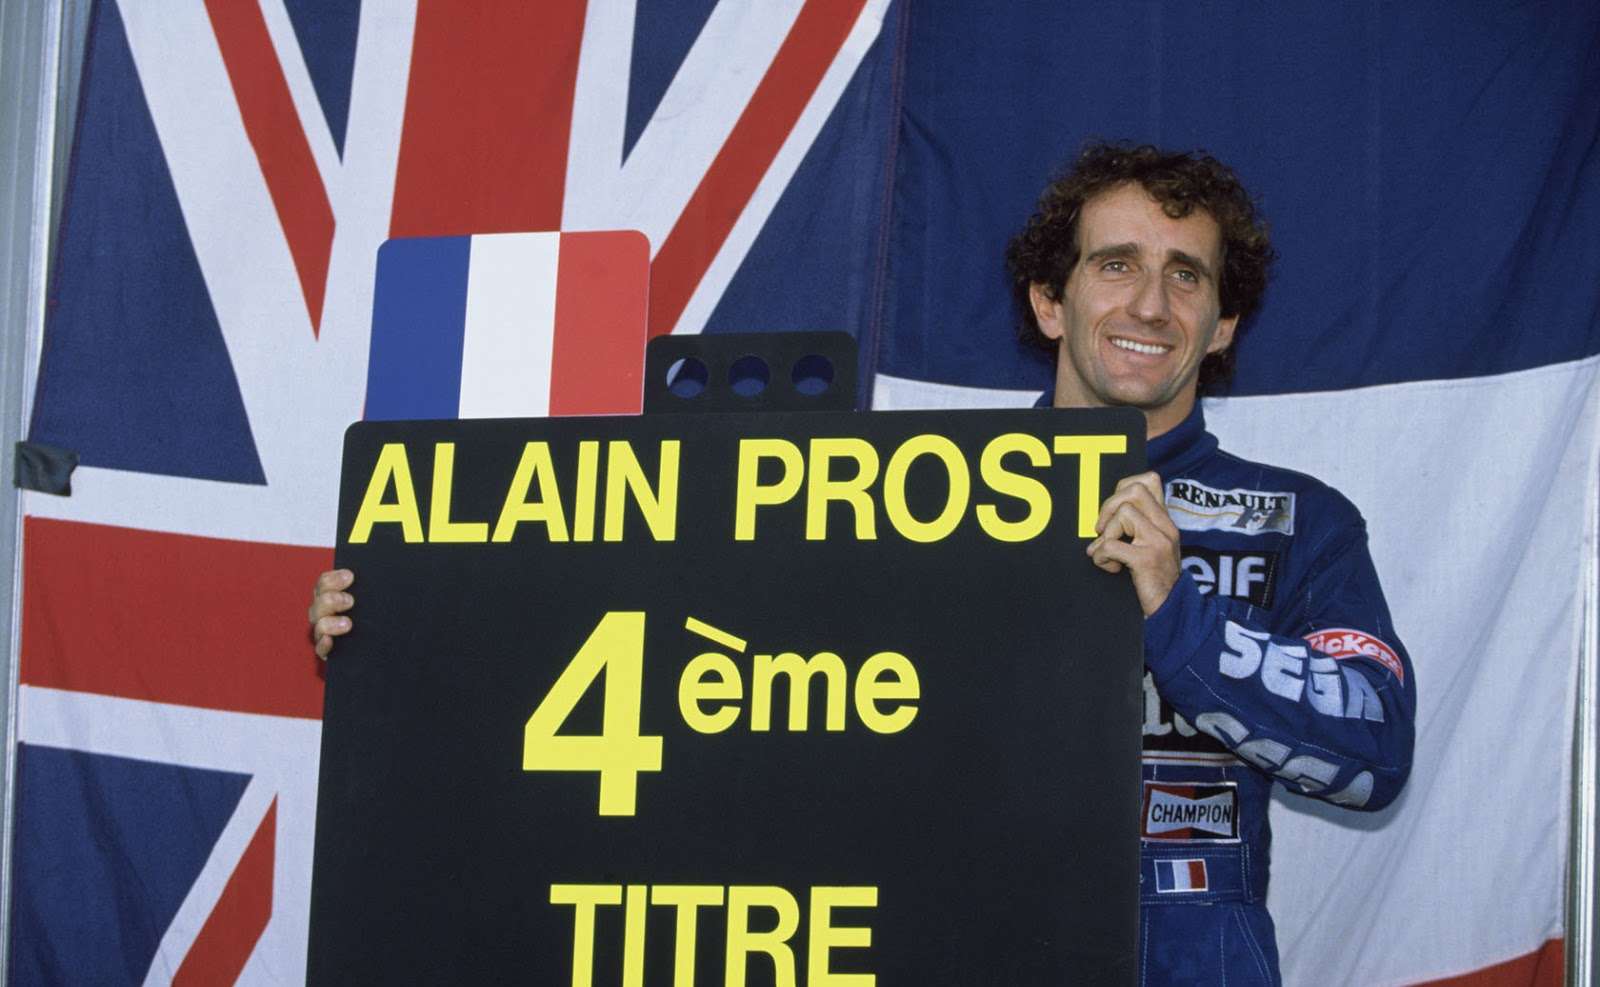 7º - Alain Prost - 33